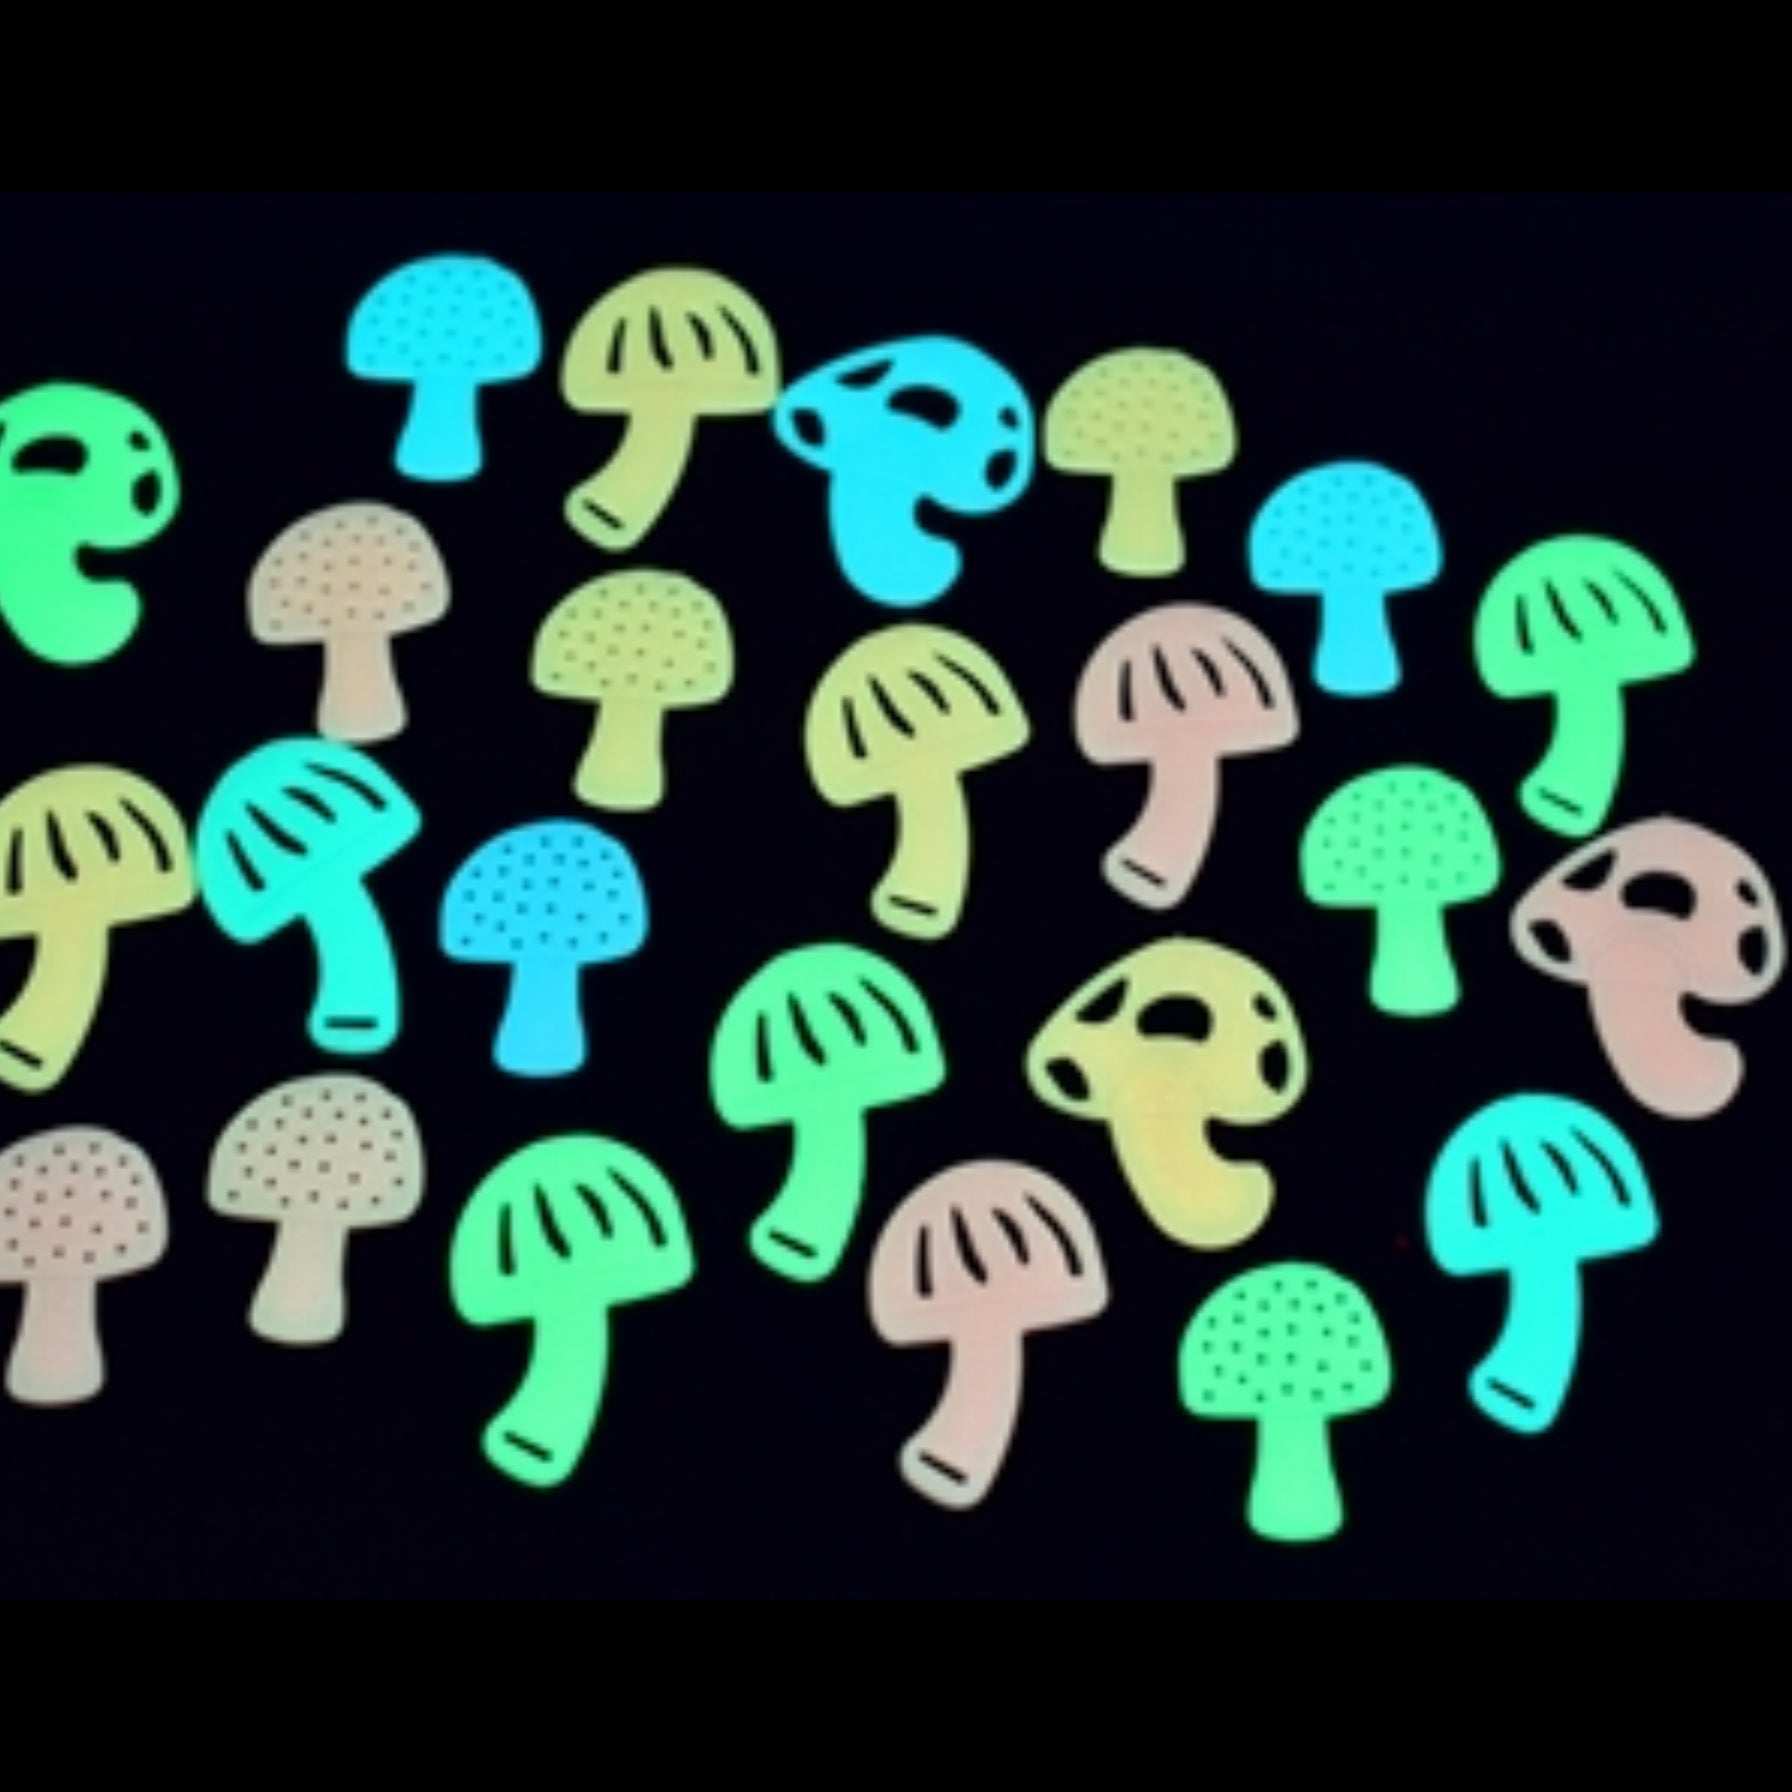 Glow in the Dark Mushrooms